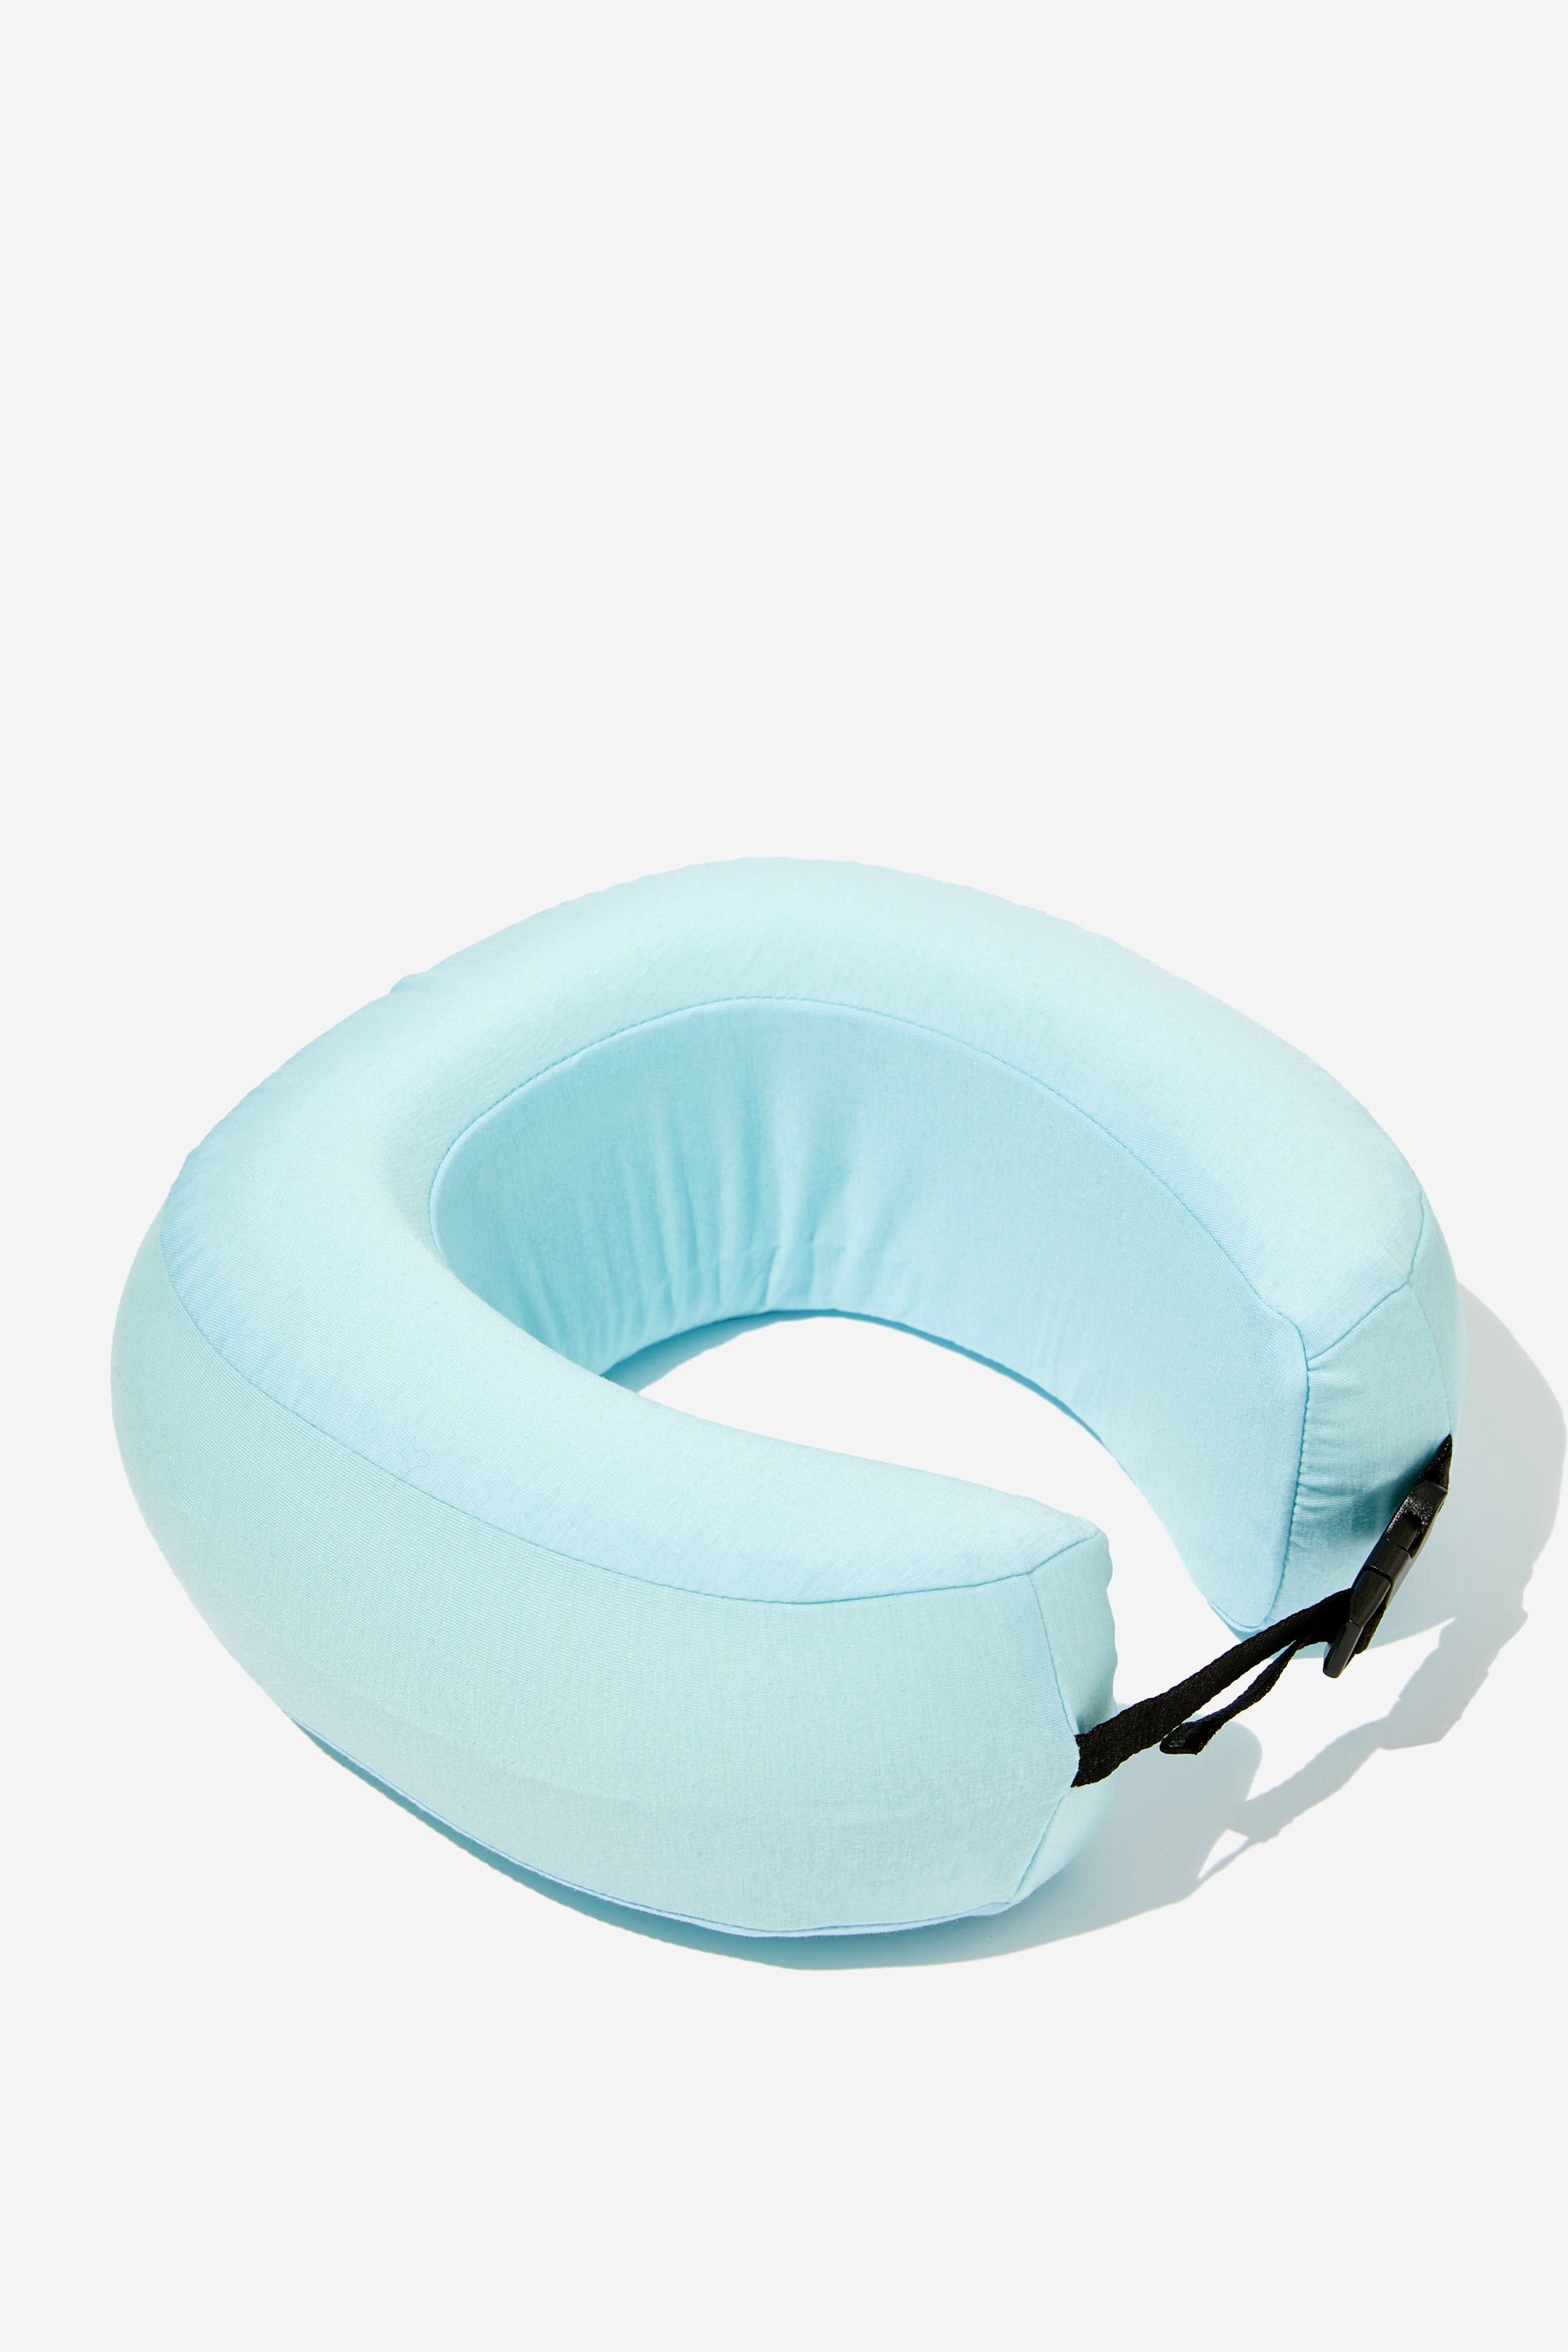 Typo - Foldable Travel Neck Pillow - Arctic blue